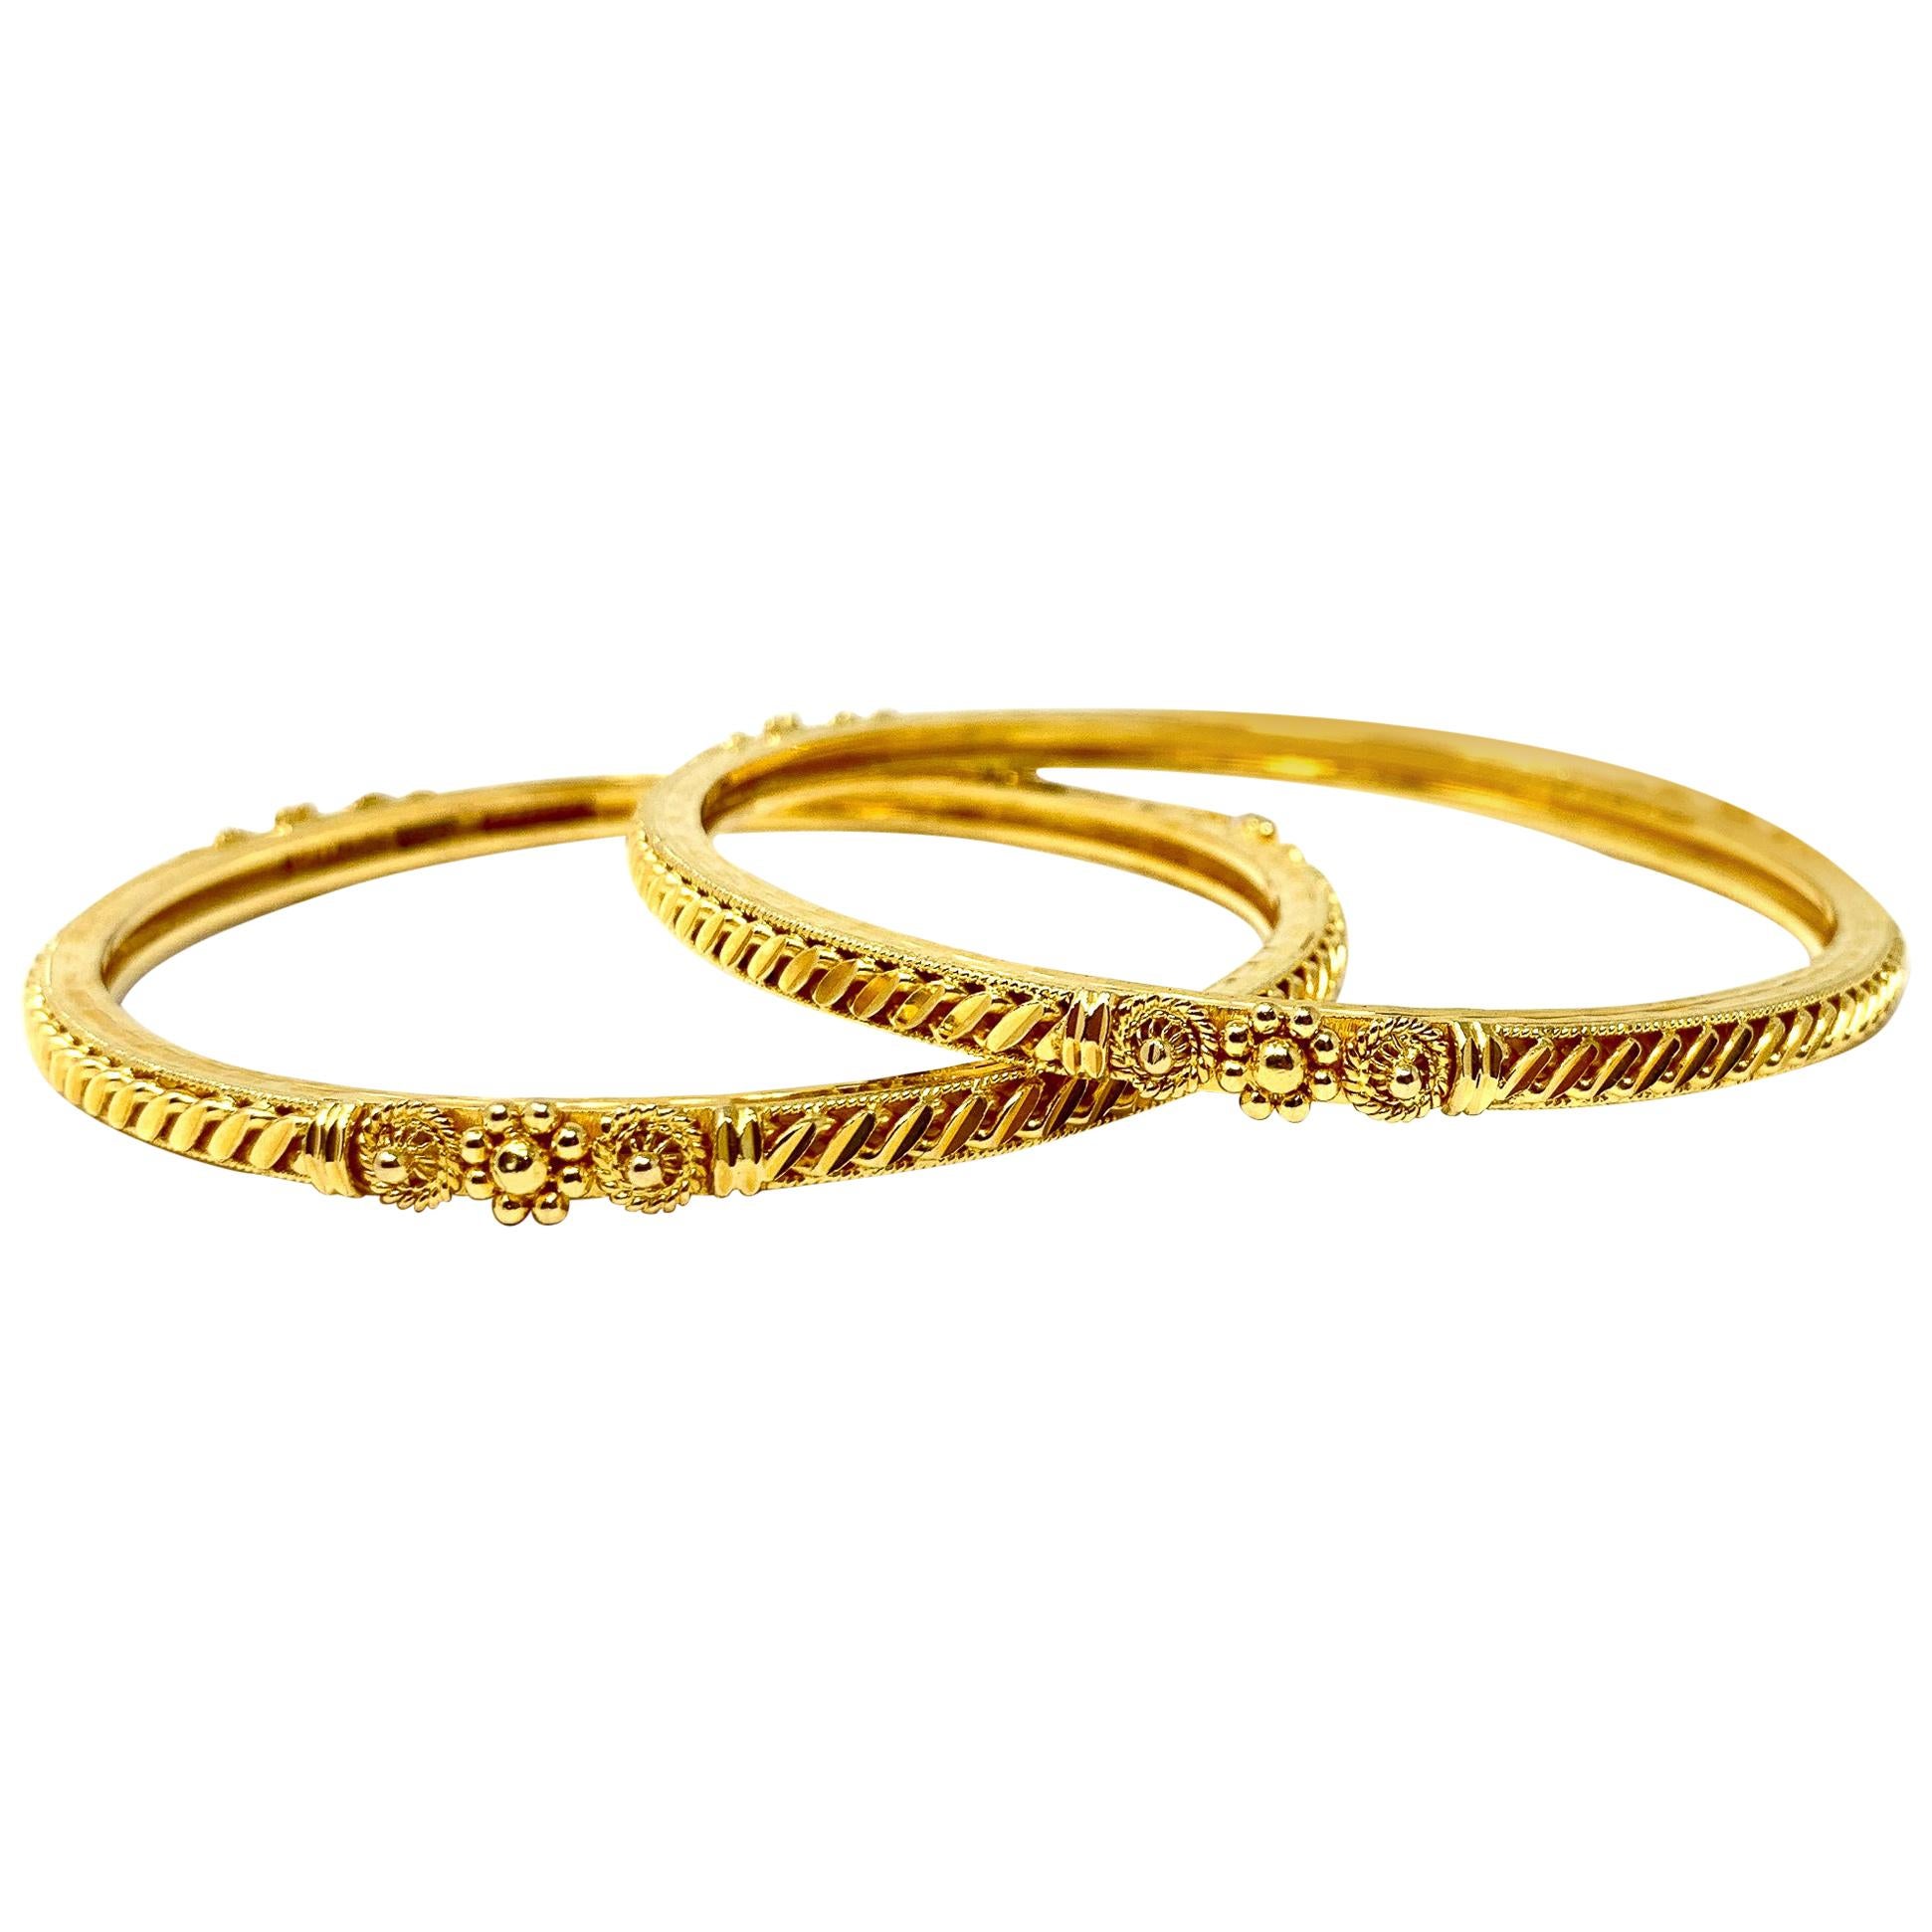 Pair of 22 Karat Solid Yellow Gold Vintage Diamond Cut Bangle Bracelets Set